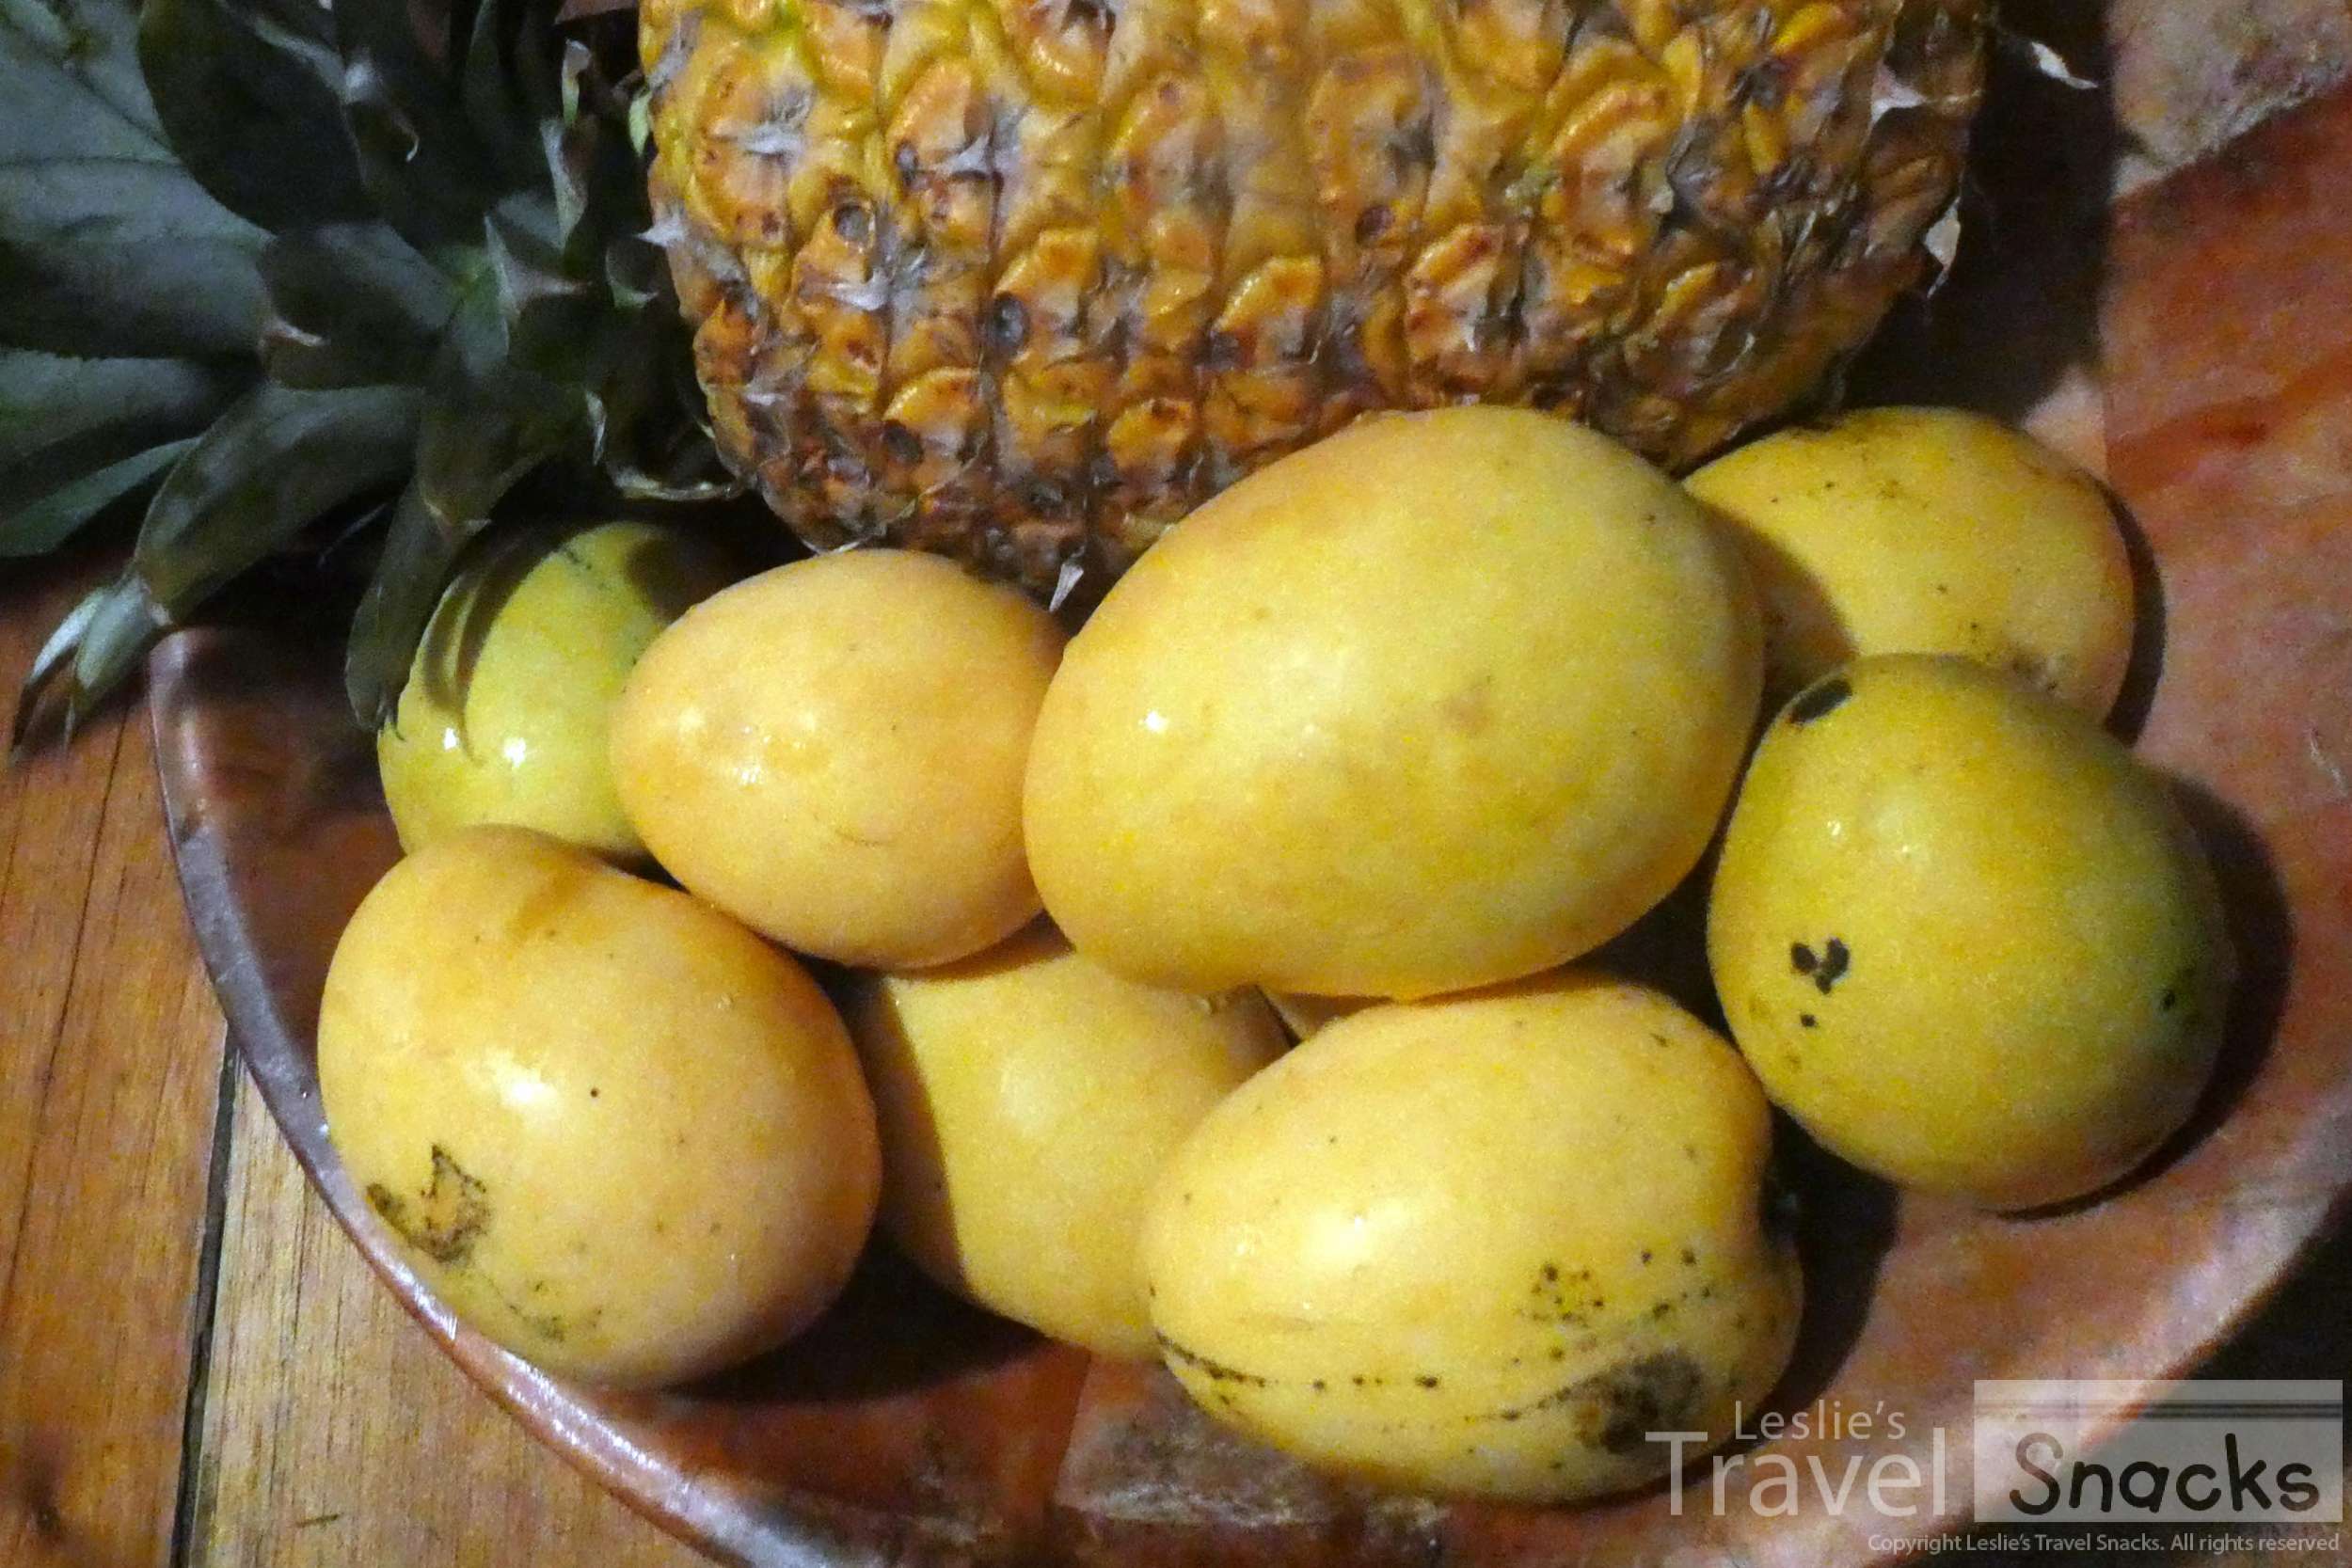 Big bowl full of (free) mangoes. I couldn't be happier.